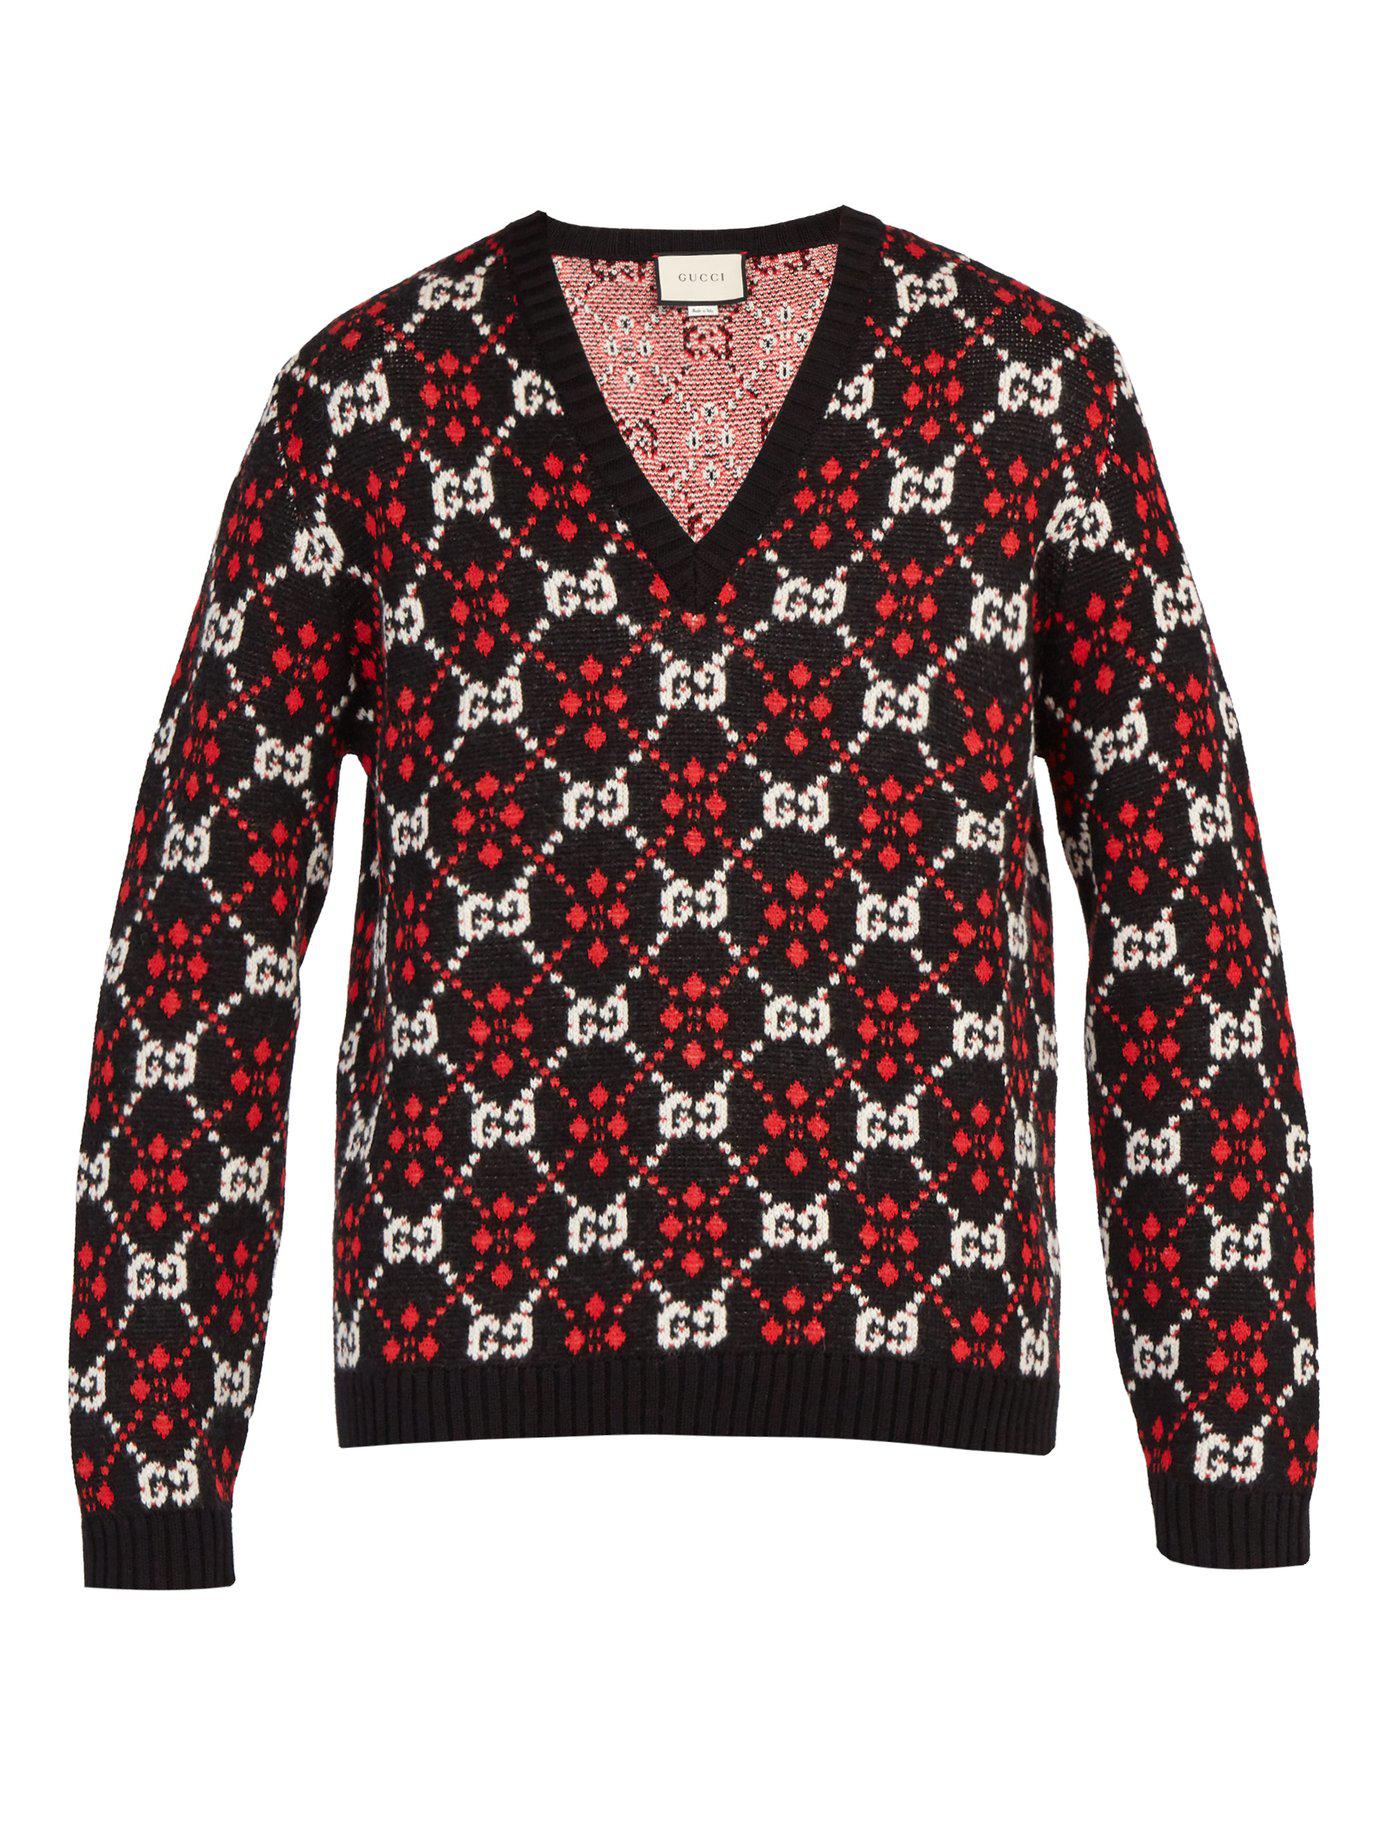 Gucci Gg Supreme V Neck Cotton Blend Sweater in Black for Men - Lyst